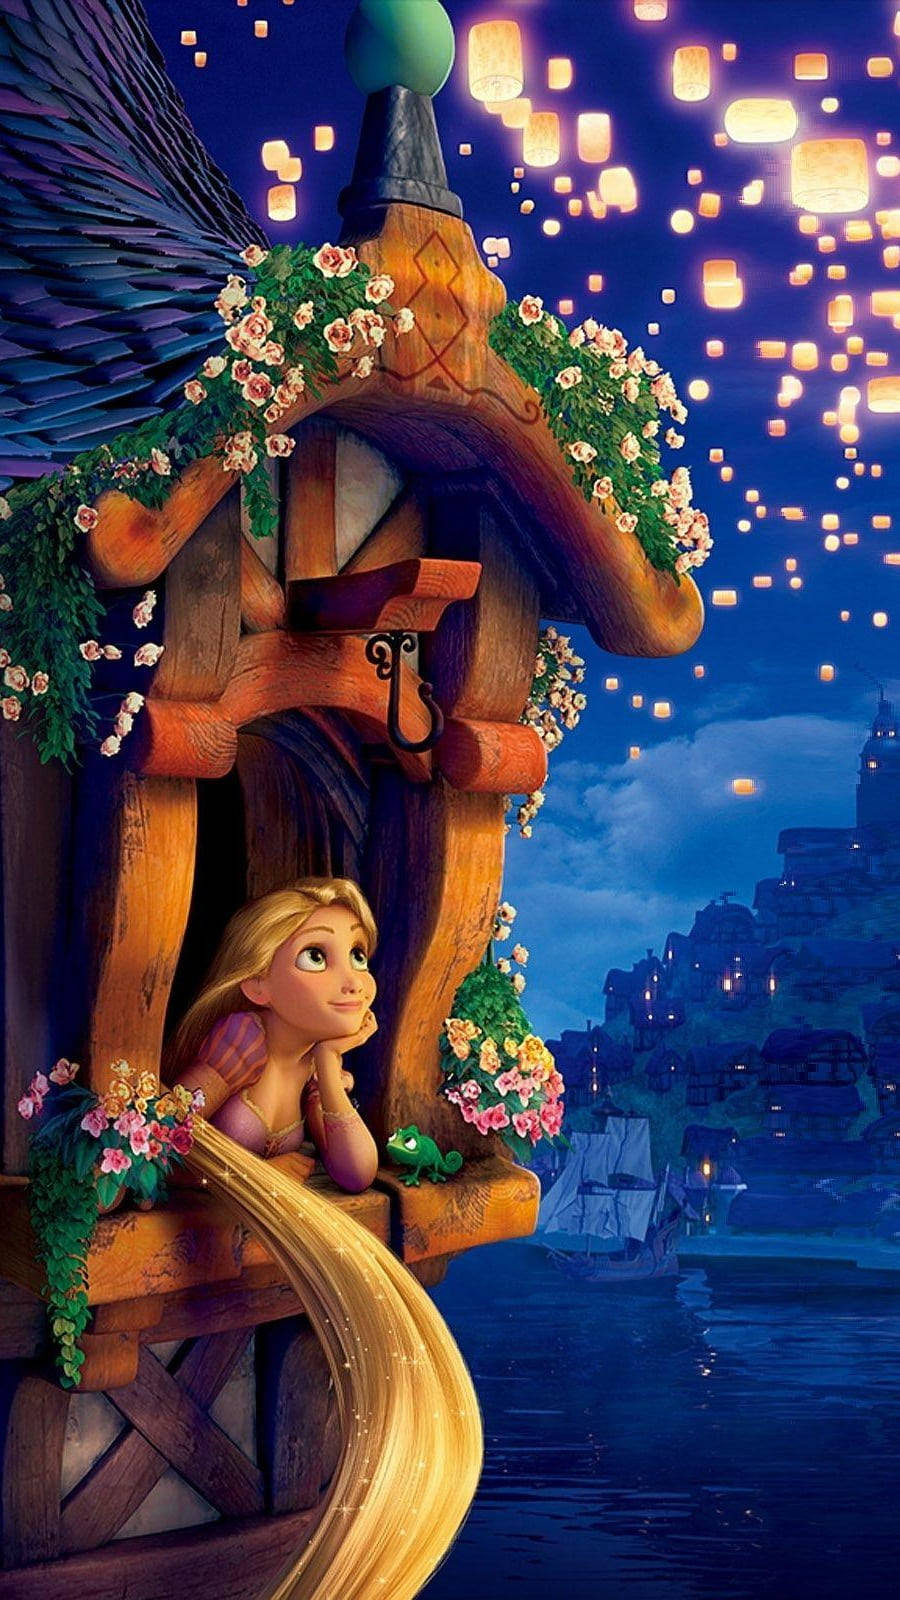 Download Rapunzel In A Tower Disney Phone Wallpaper | Wallpapers.com